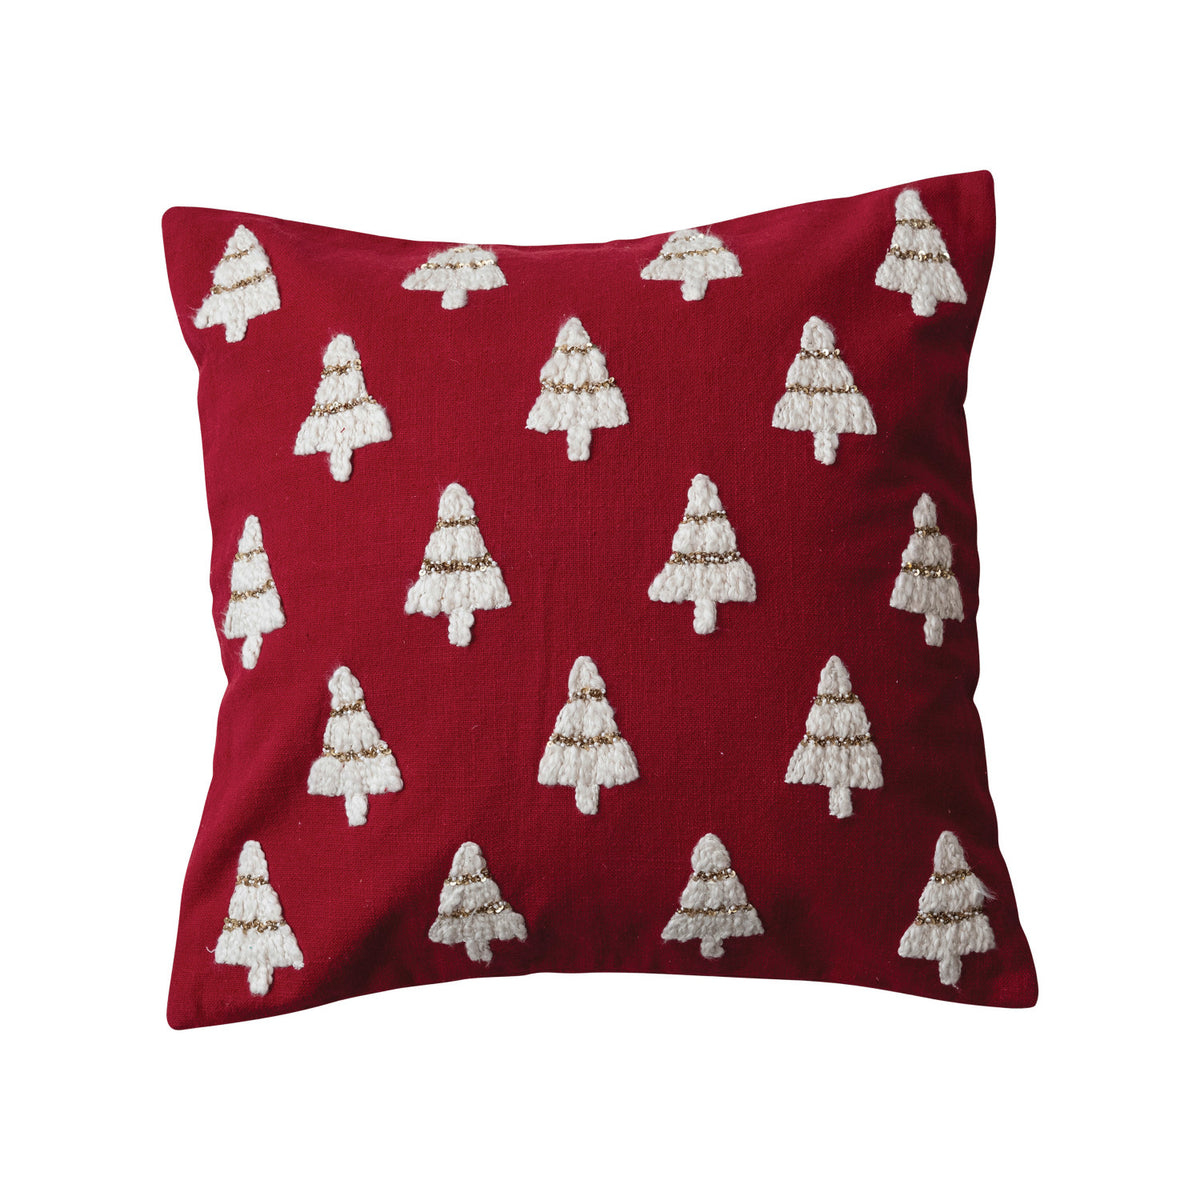 20" Square Cotton Slub Pillow w/ Embroidered Christmas Trees & Beads, Red & White